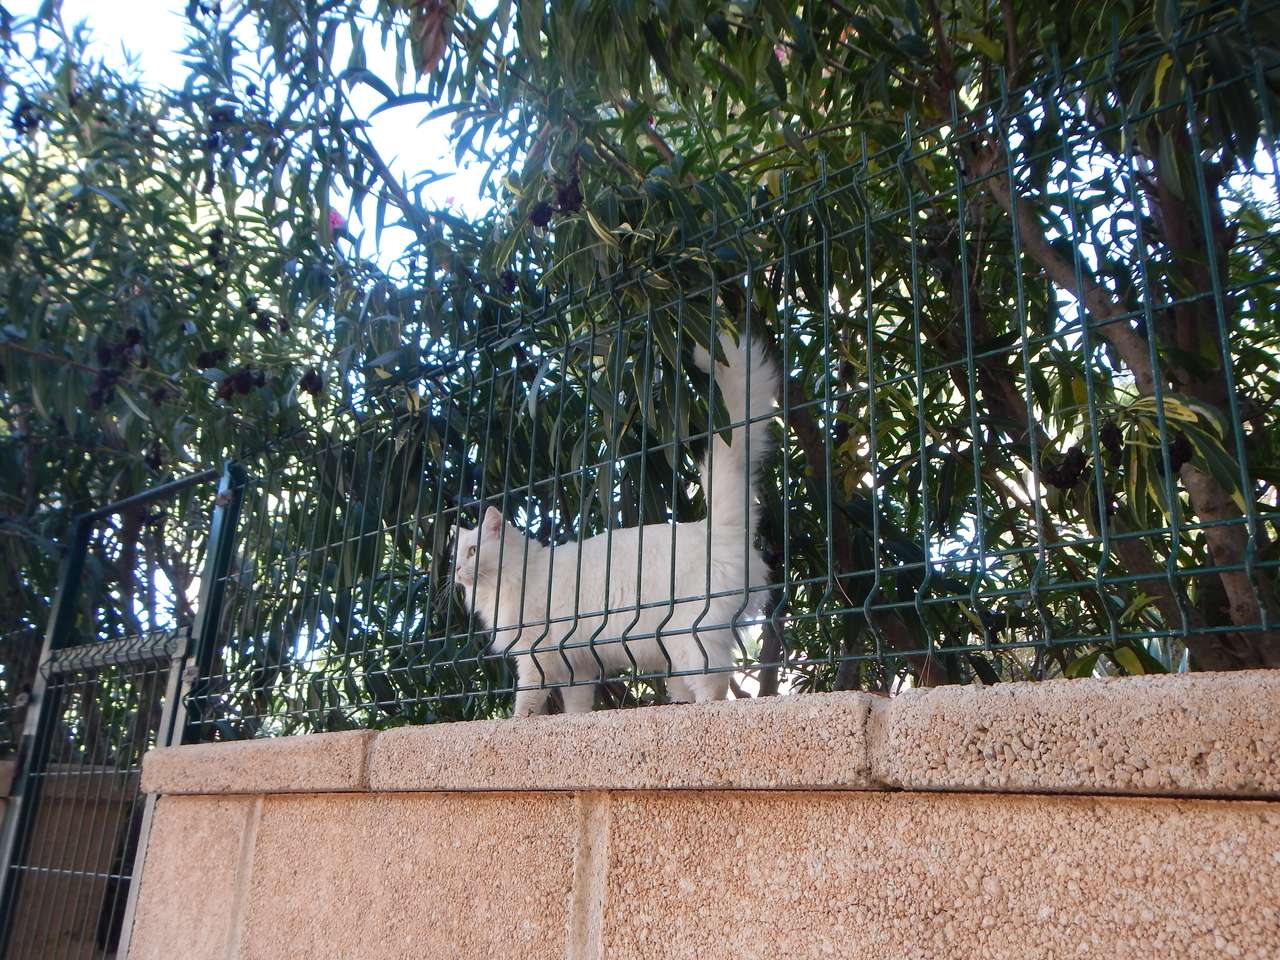 Katt bakom staketet och på jakten. Pussel online